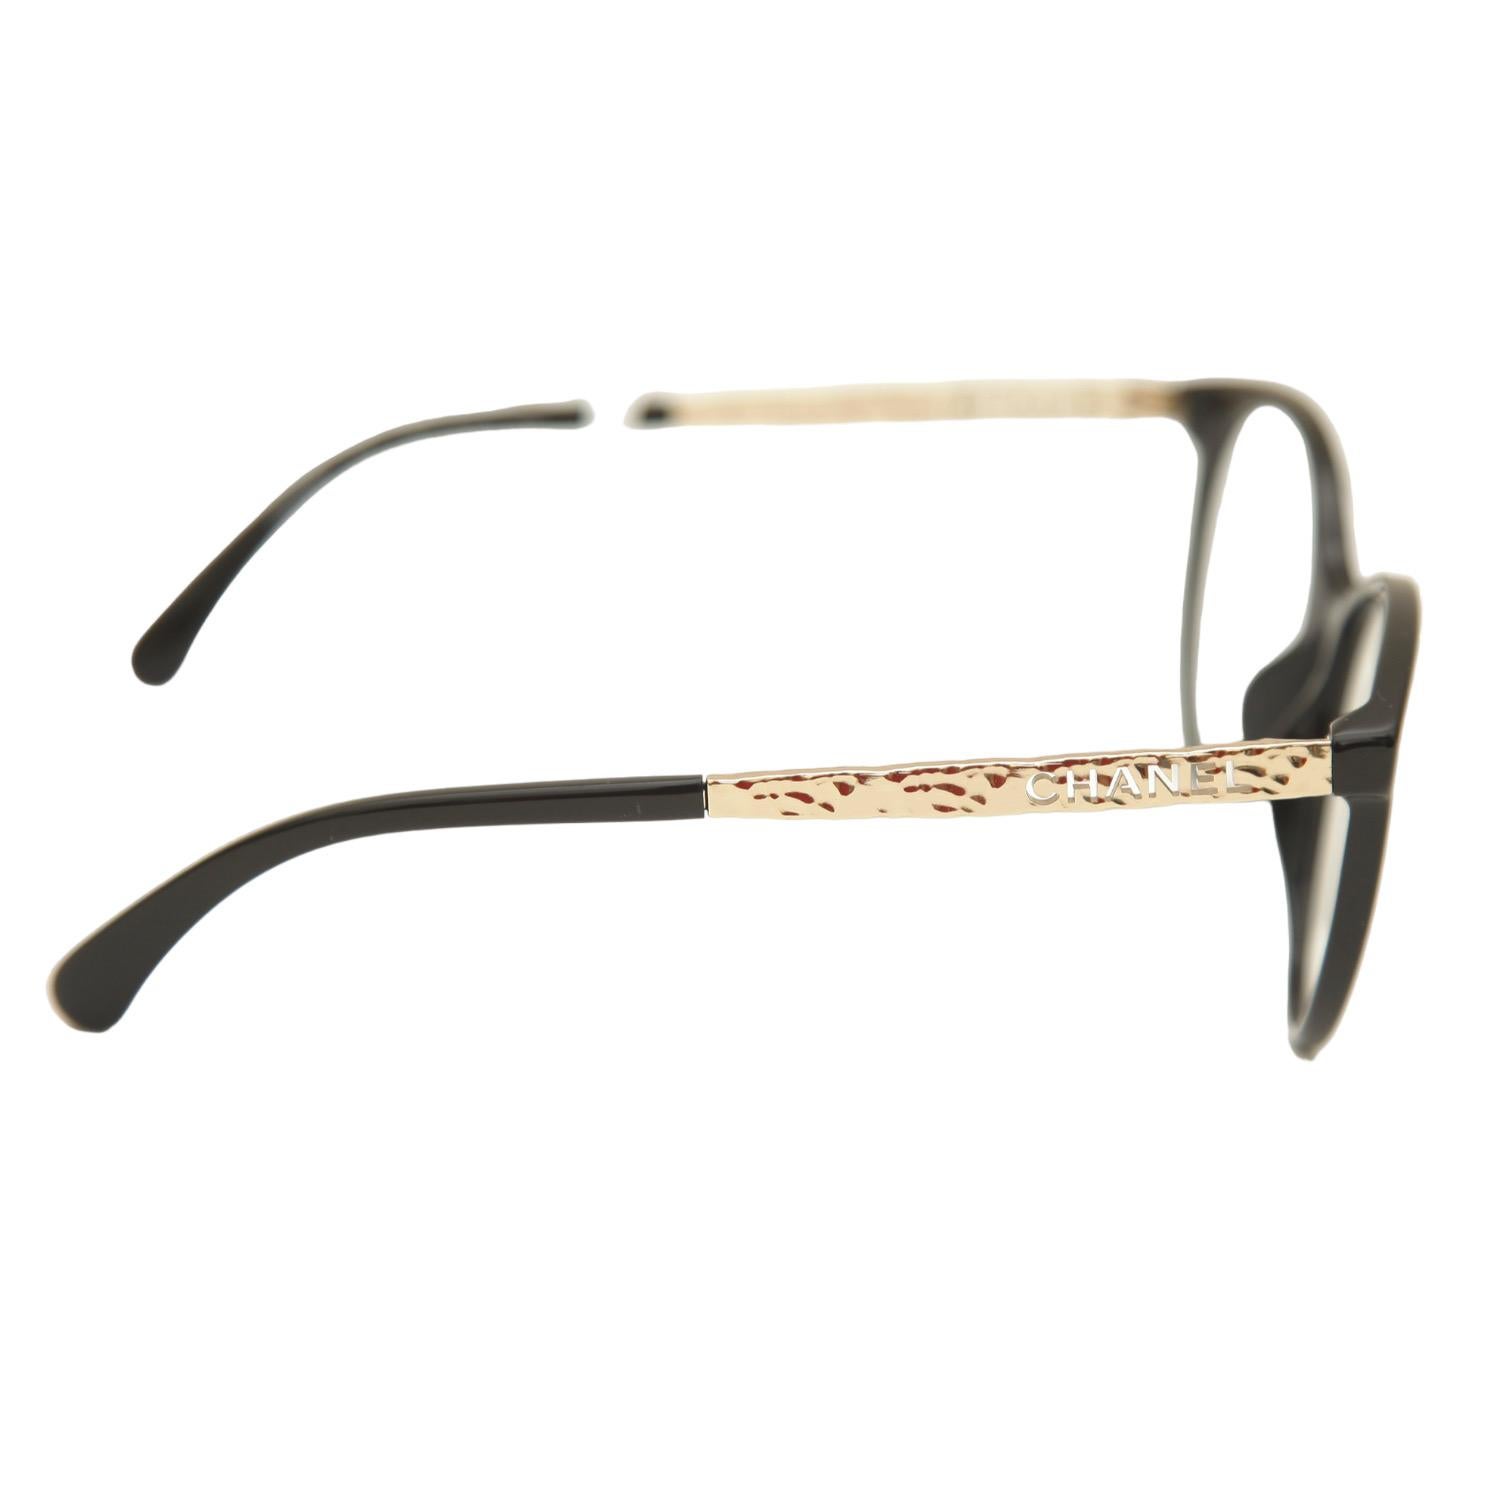 CHANEL Eyeglass Frames Black Gold PANTOS Acetate Metal Eyewear 3409 c.622 In New Condition In Hollywood, FL